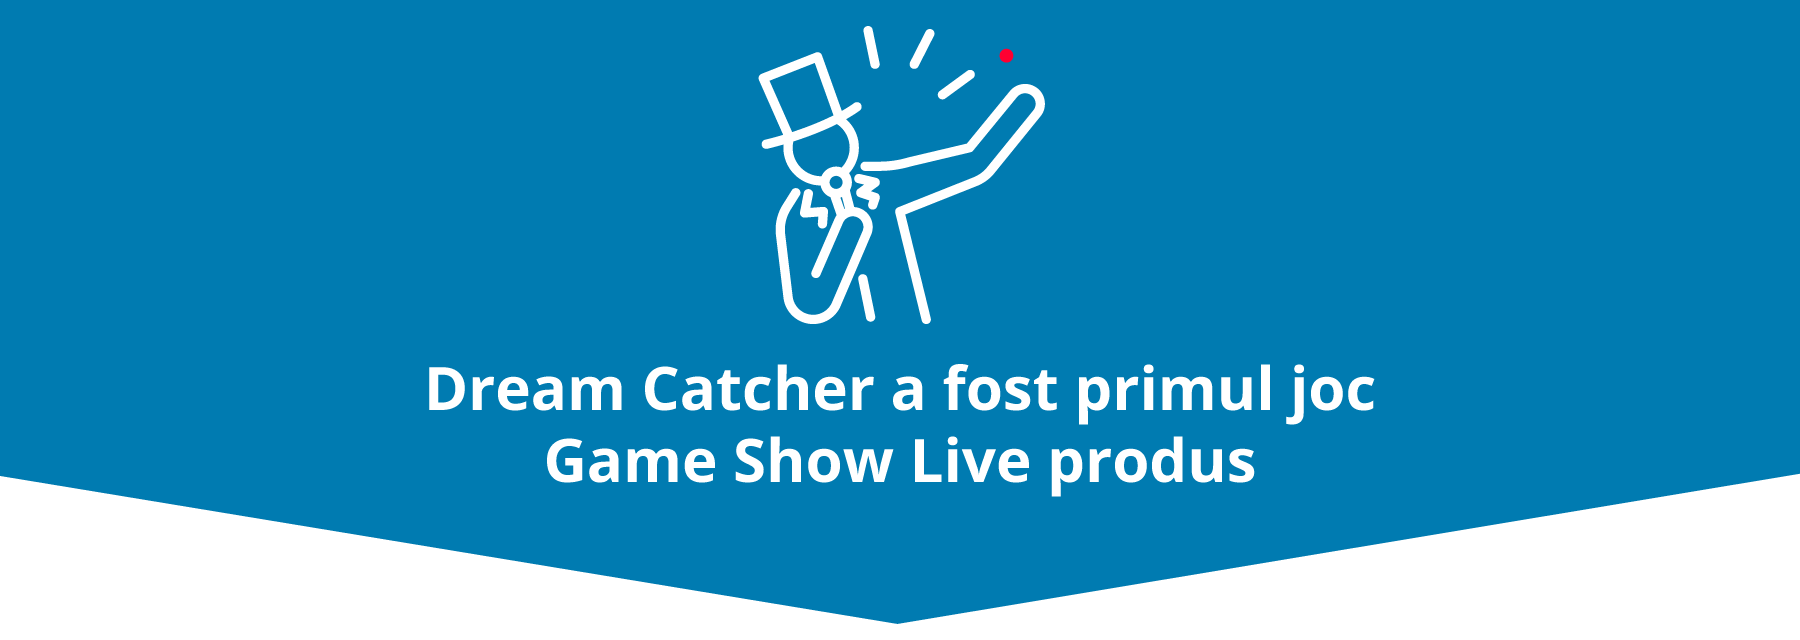 Dream Catcher joc Game Show